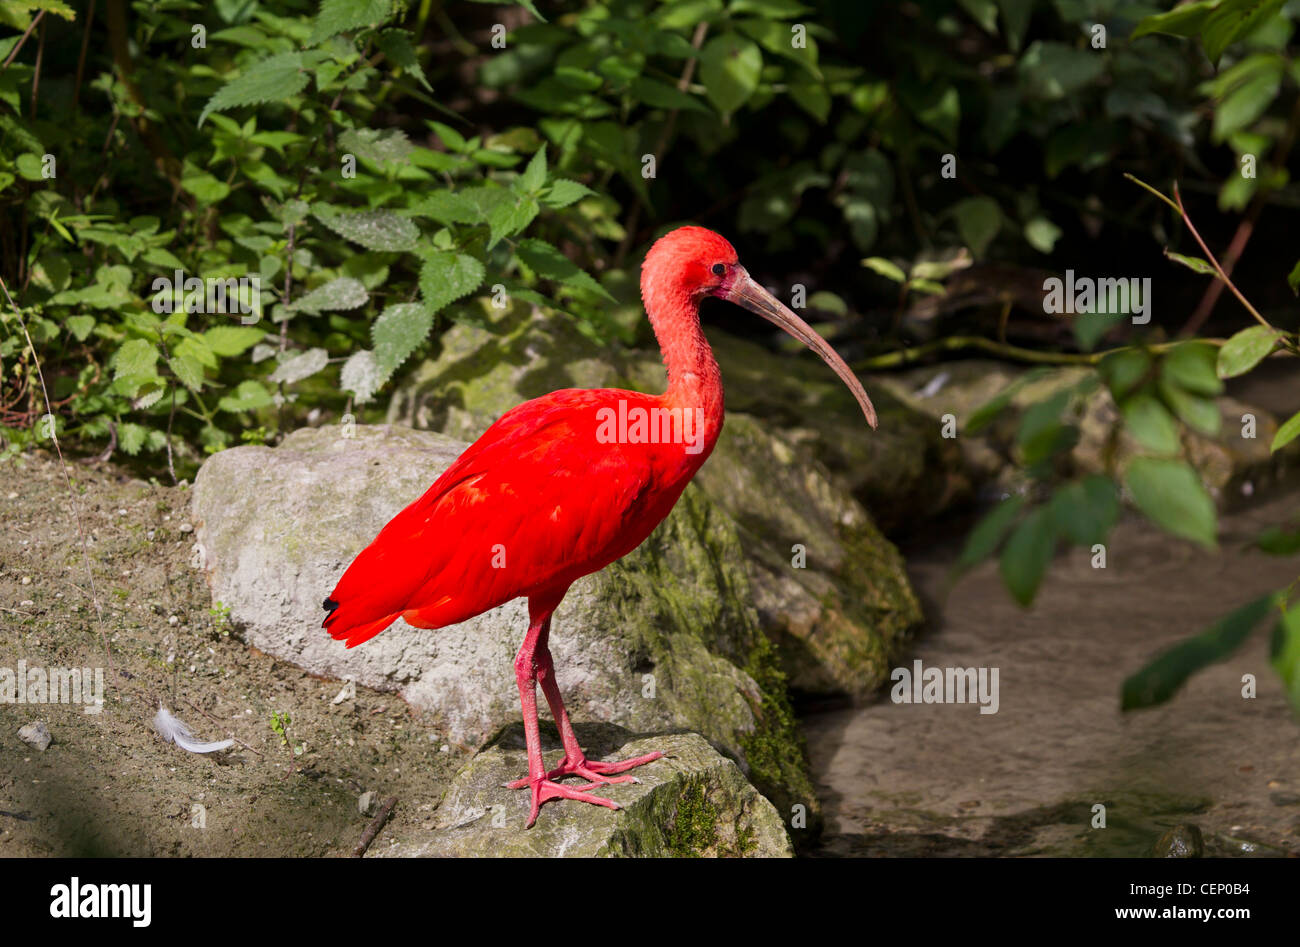 Roter Sichler, Eudocimus ruber, scarlet ibis Stock Photo